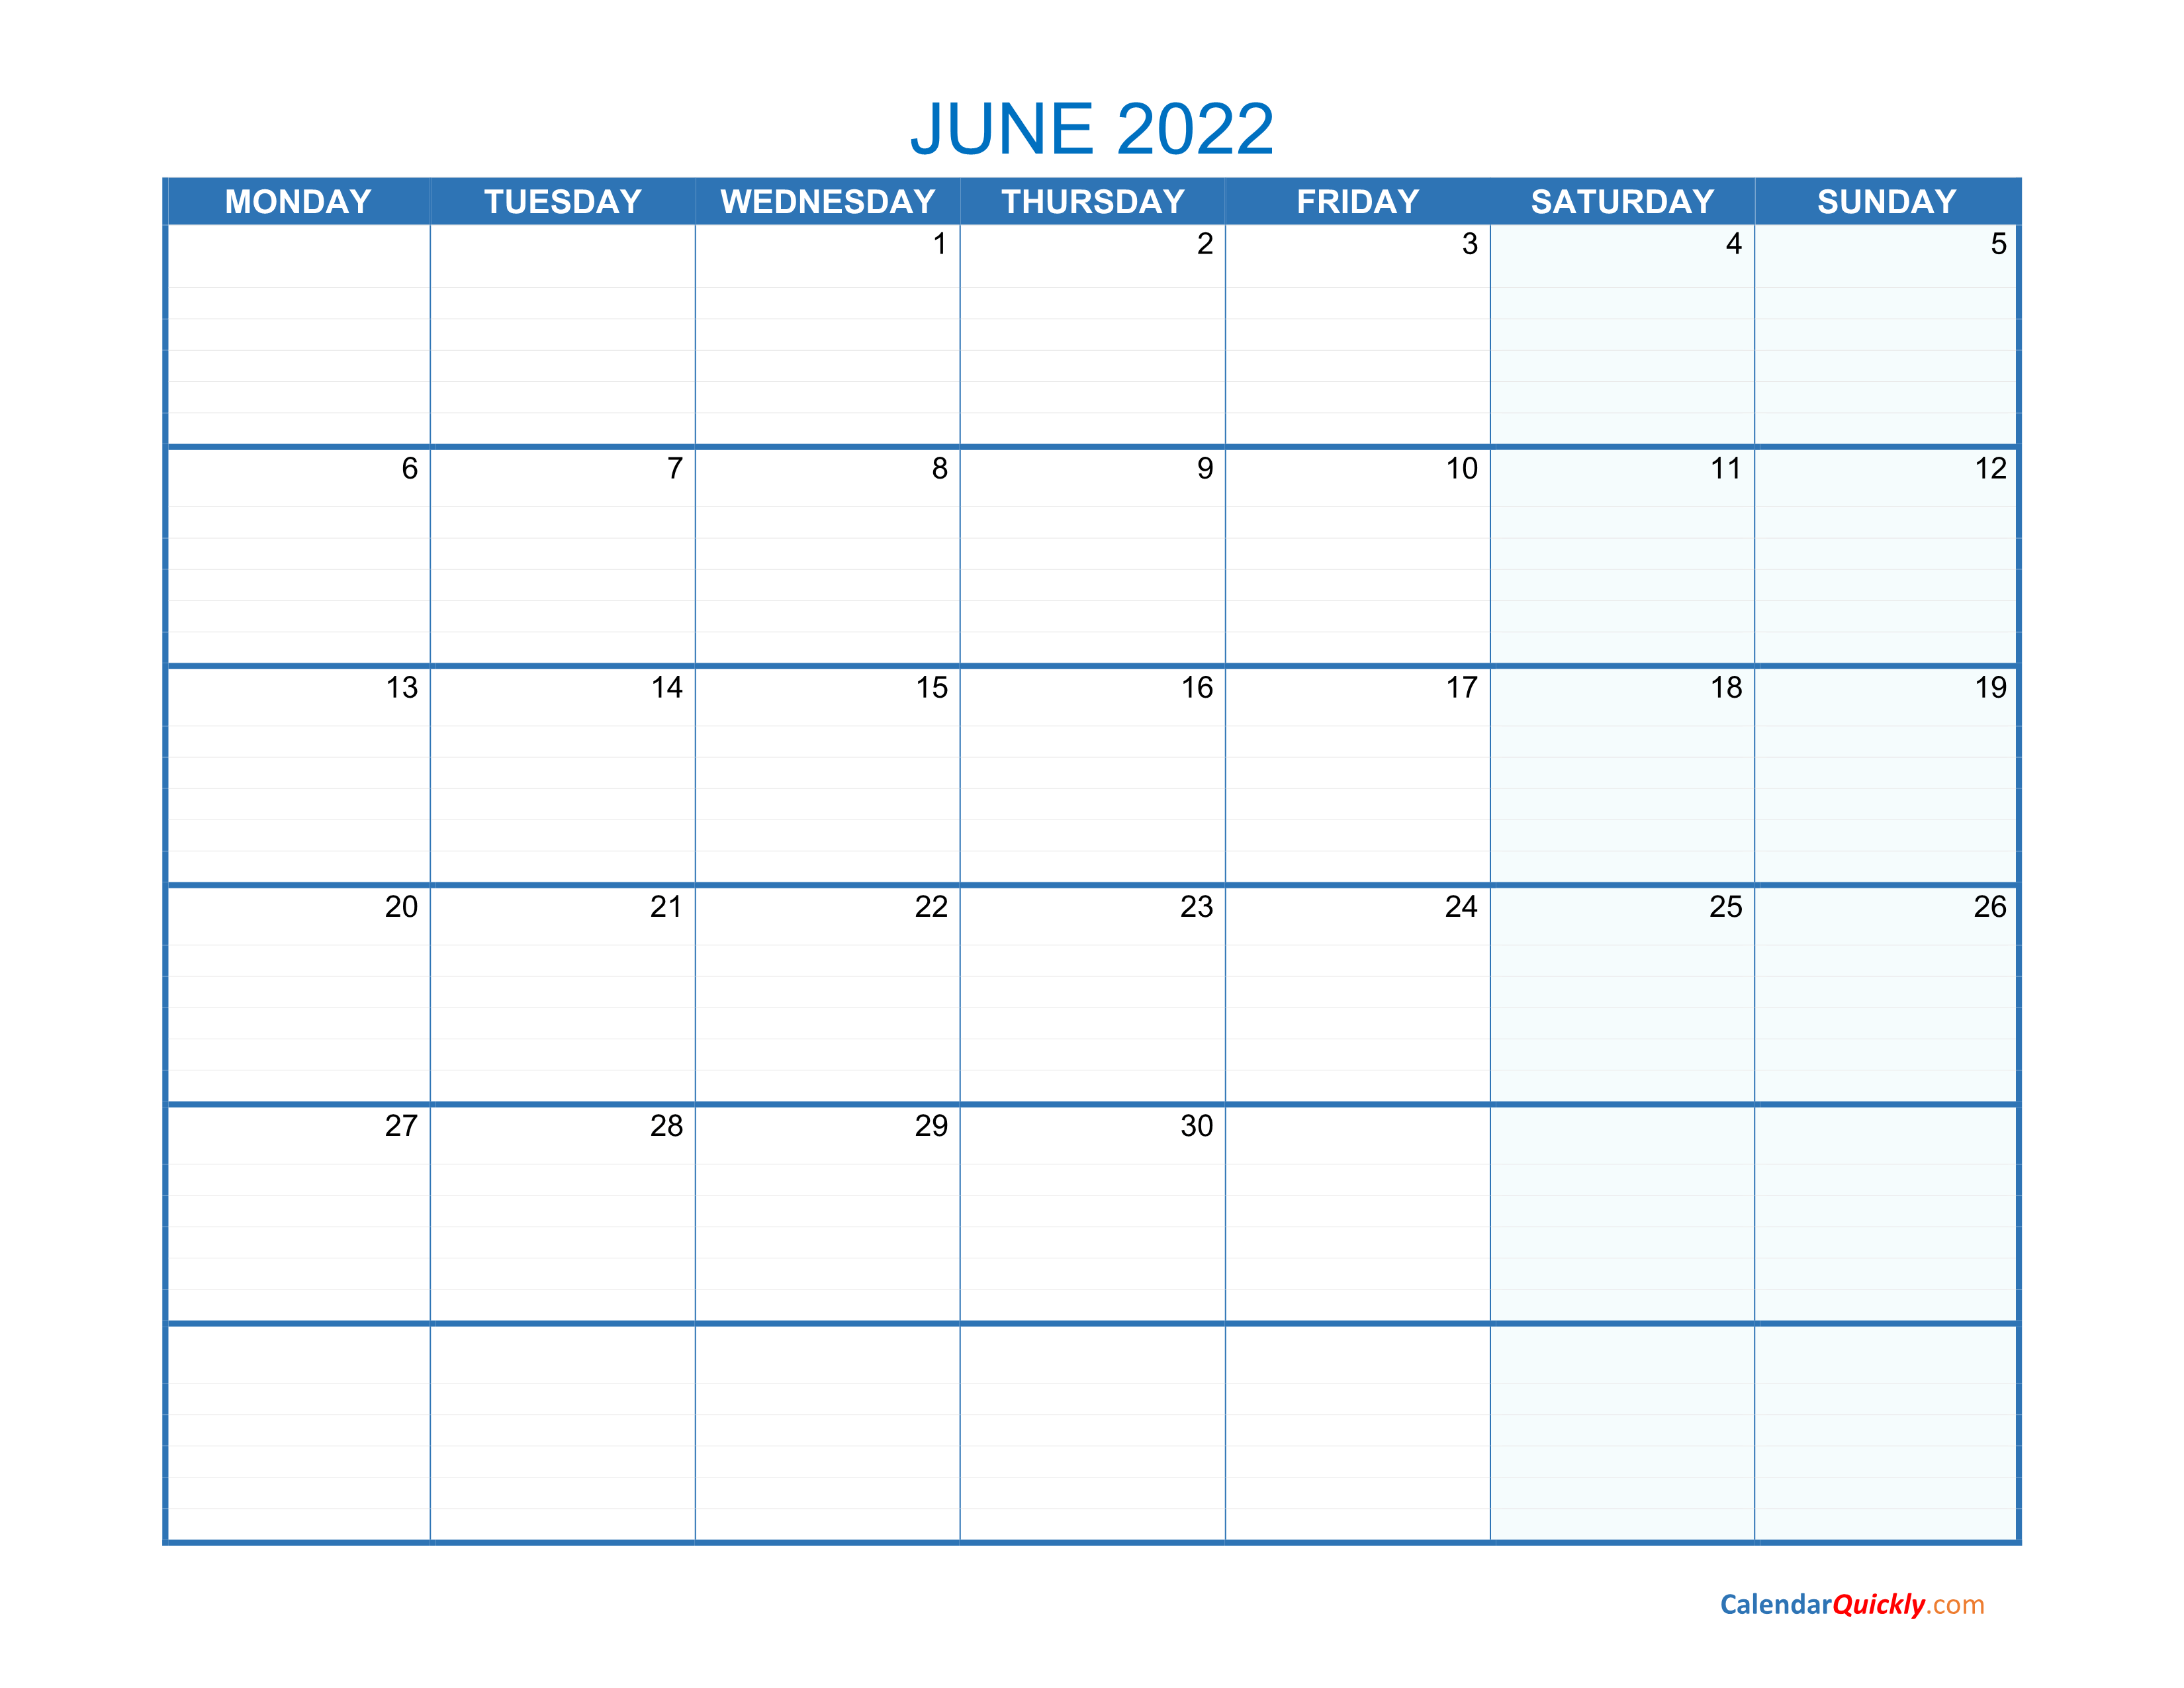 June Monday 2022 Blank Calendar 